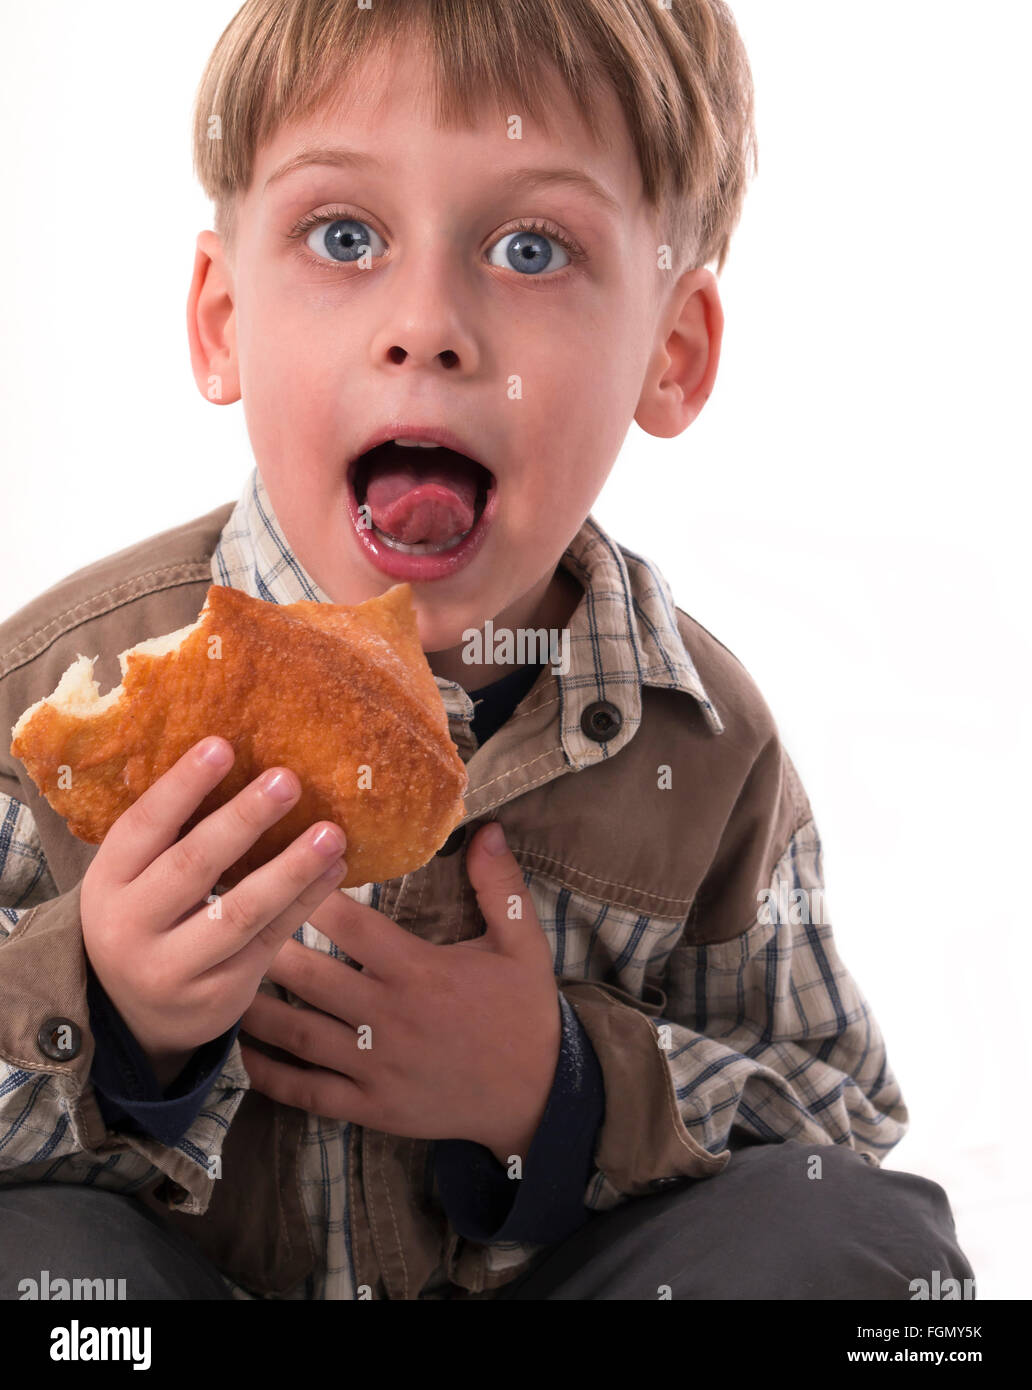 boy eating donut Stock Photo